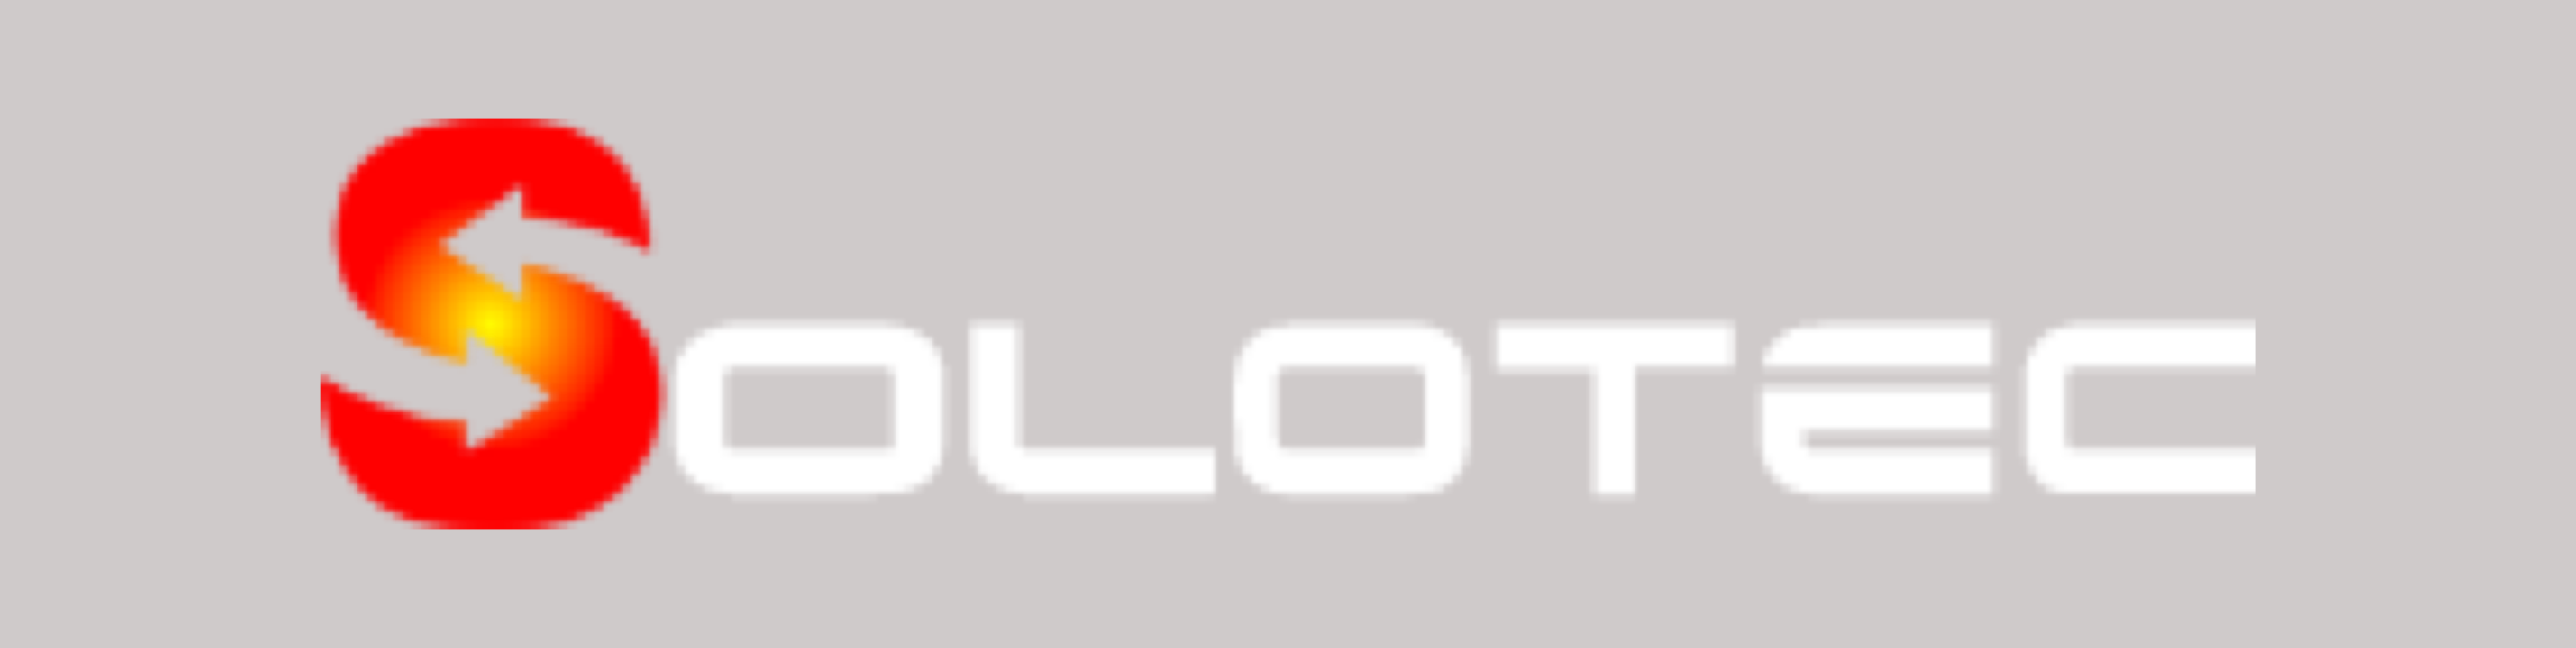 Solotec logo